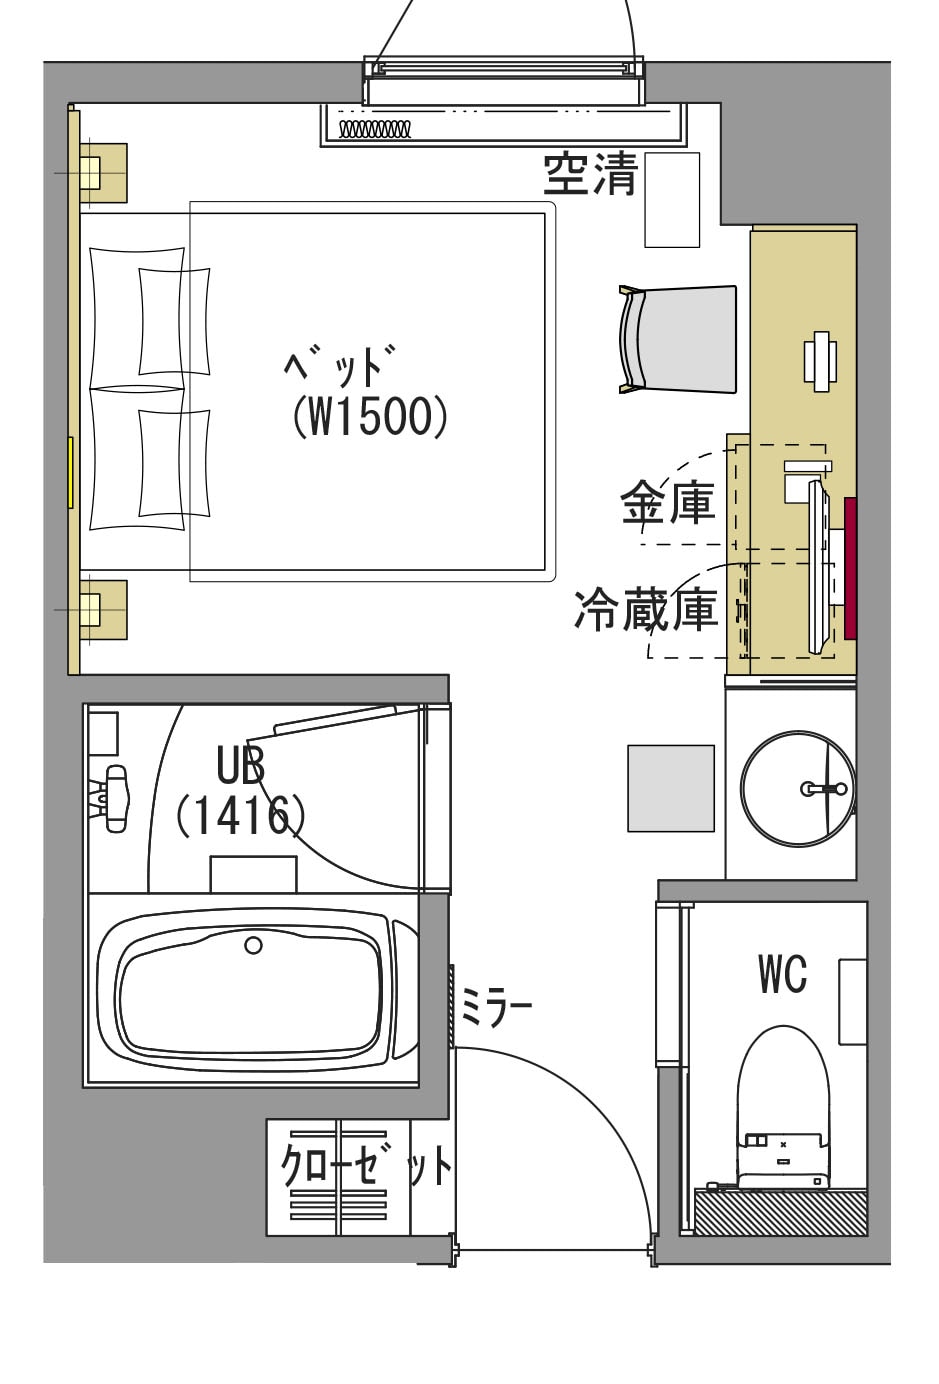 Moderate double floor plan